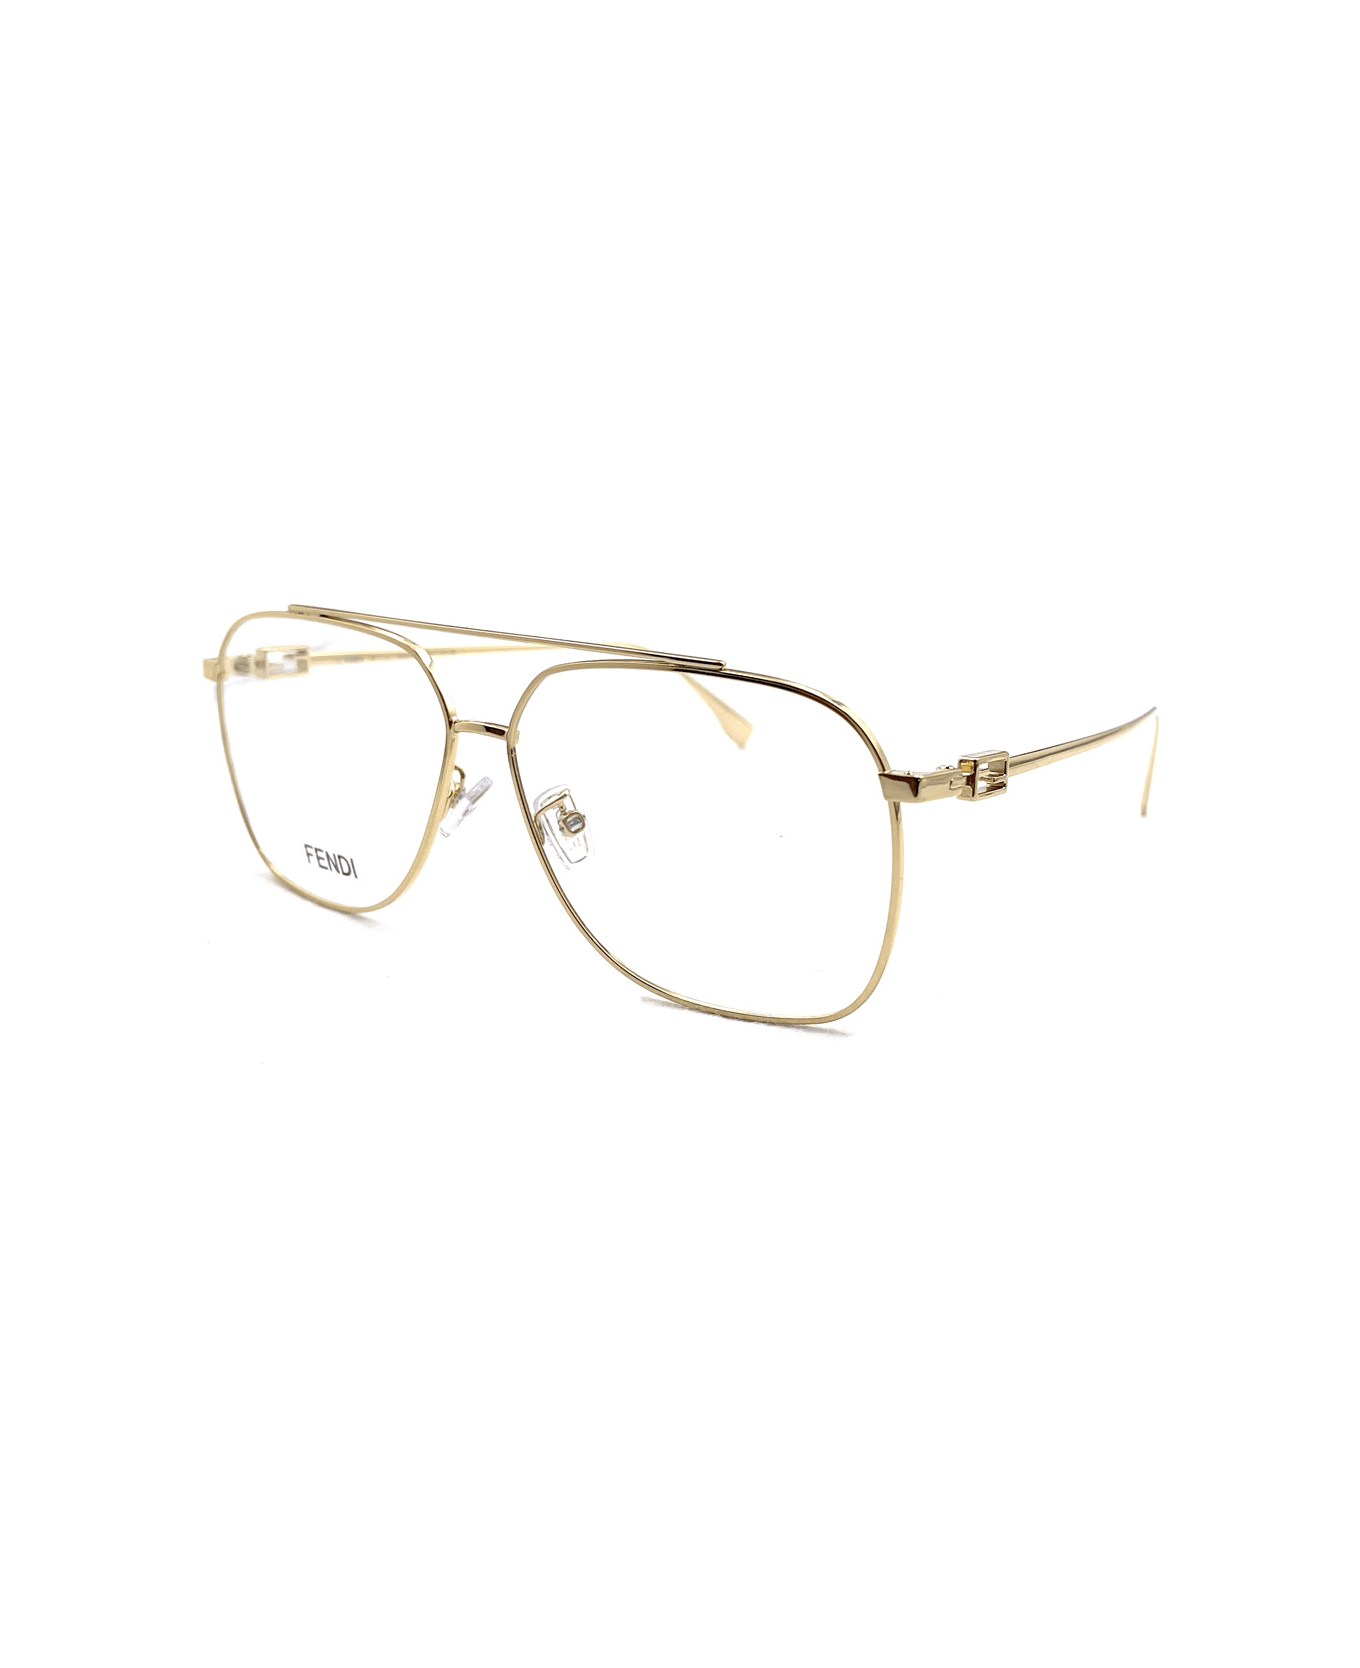 Fendi Eyewear Fe50083u 030 Glasses - Oro